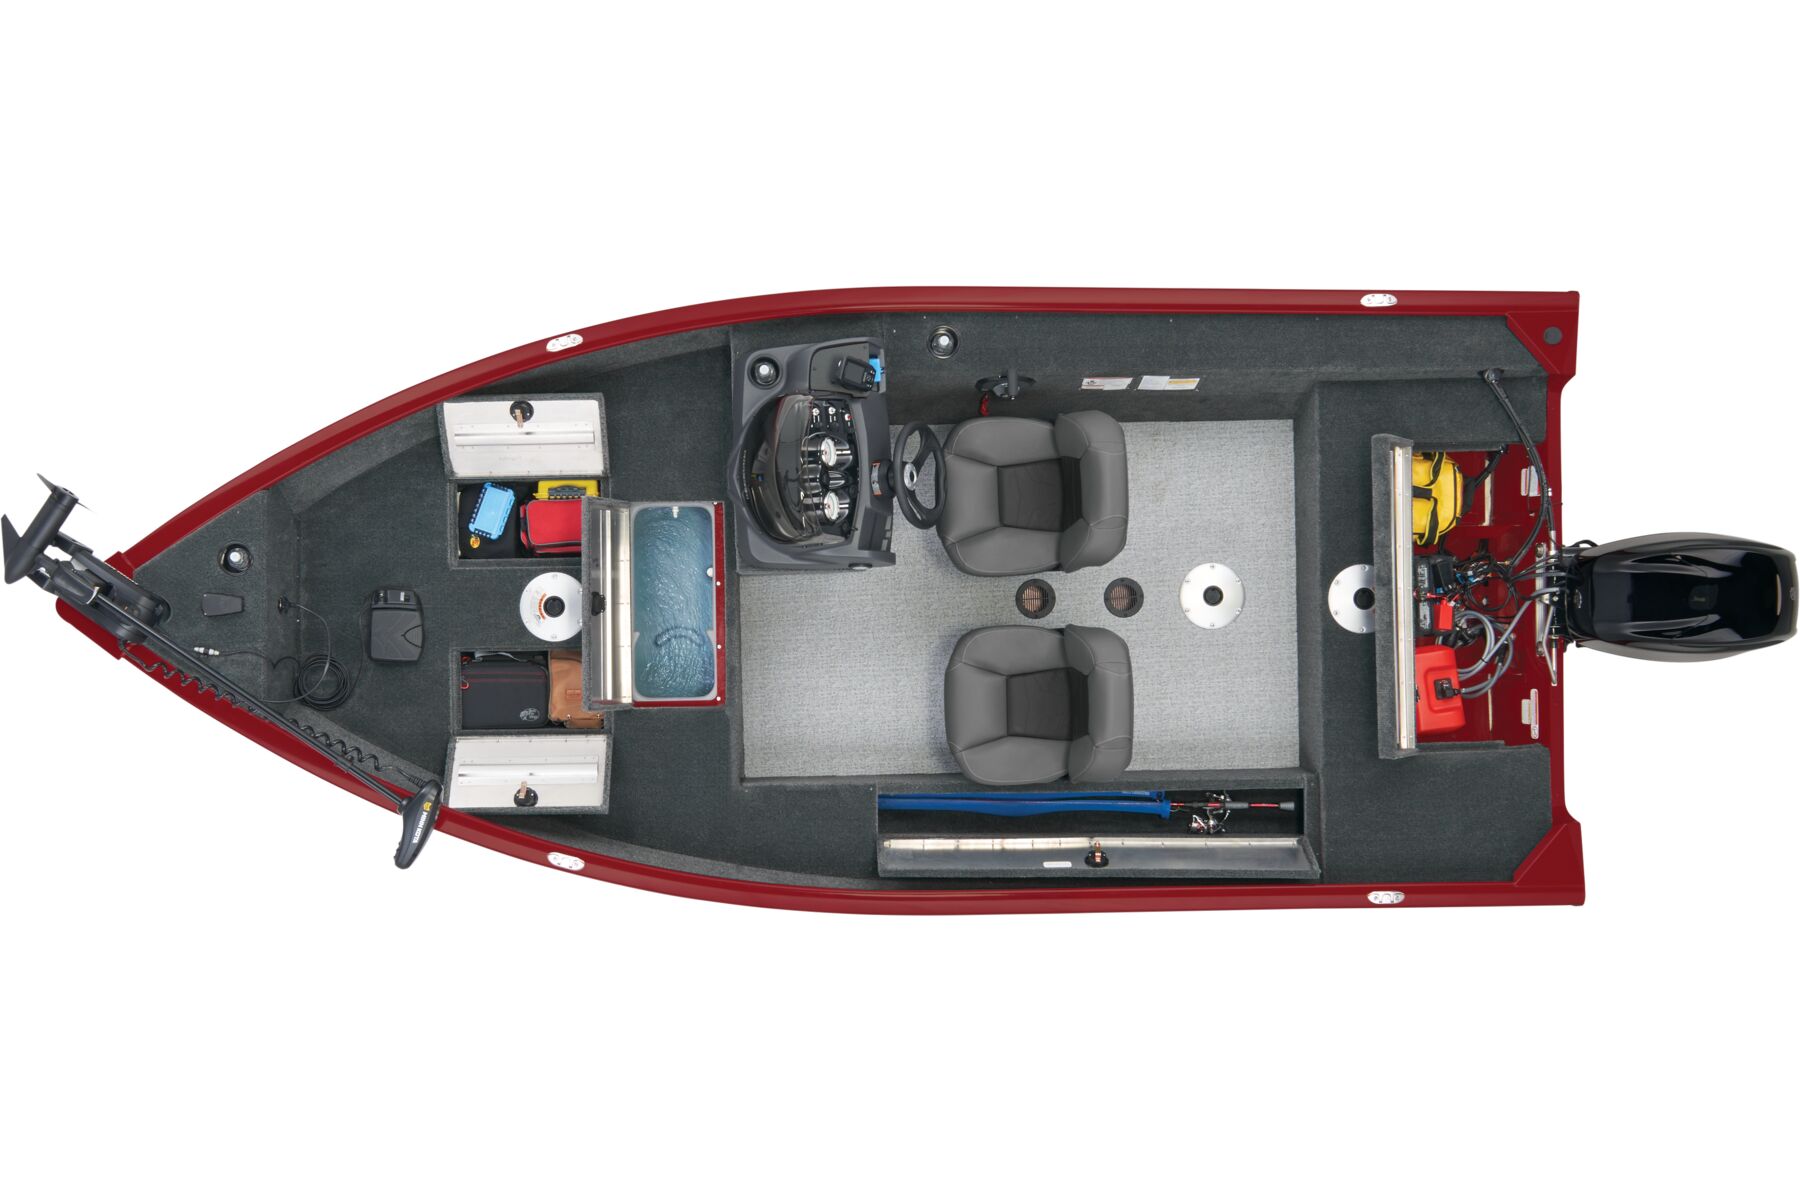 V-Series: Aluminum Utility Boats 2024 Models - Alumacraft